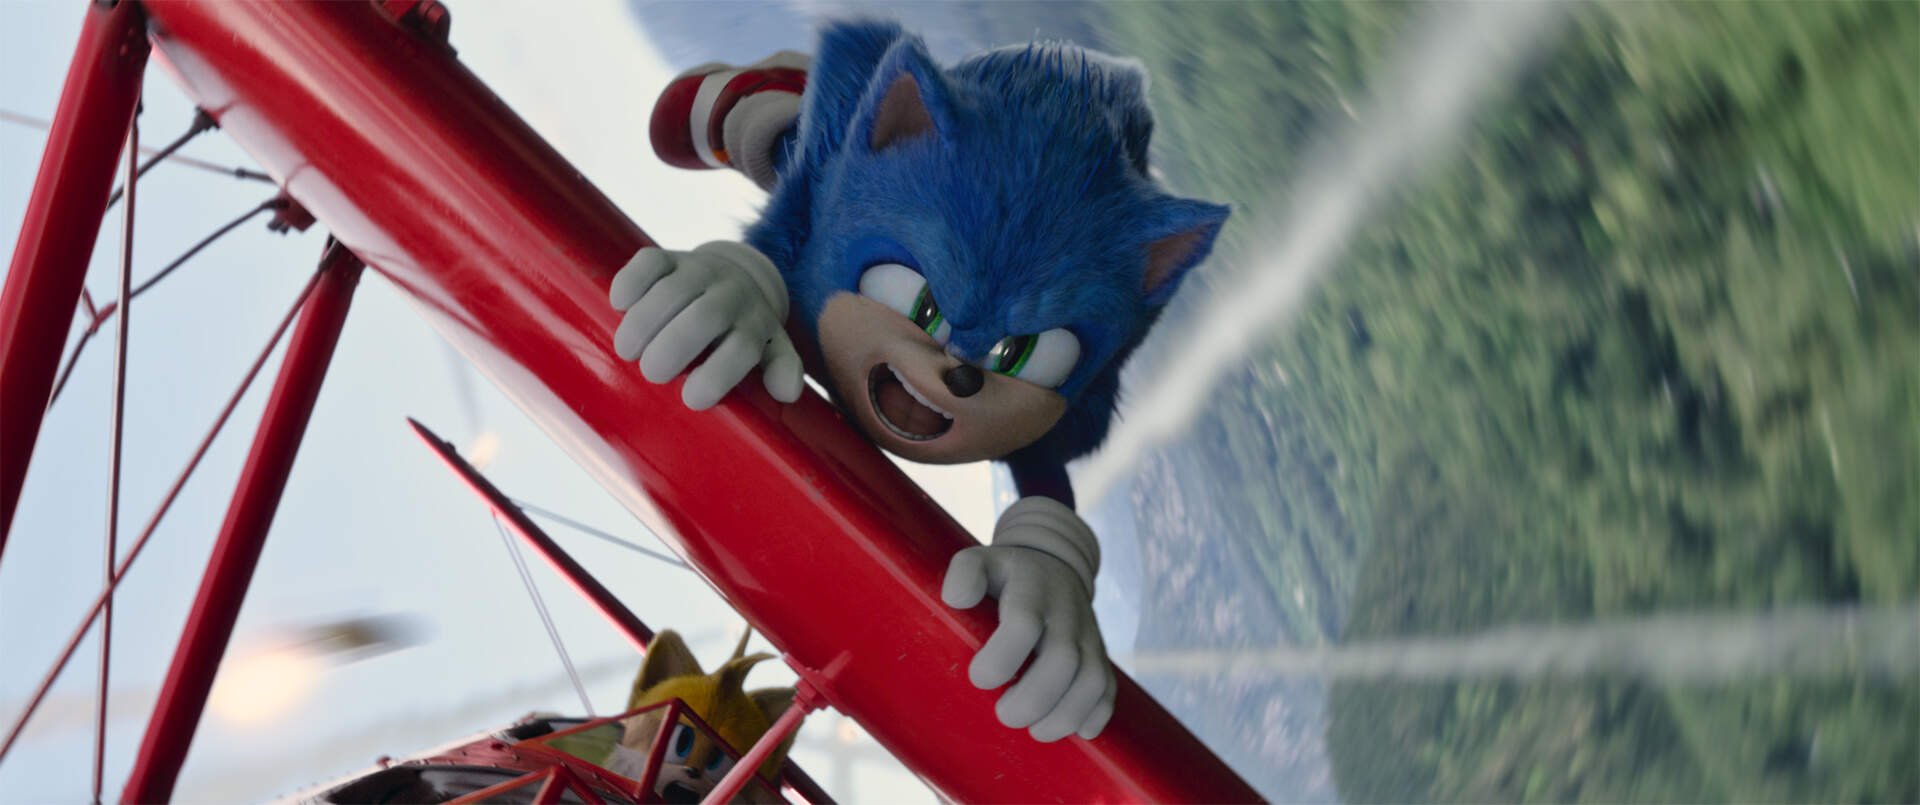 Sonic The Hedgehog 2 - Szenenbild 1 von 2